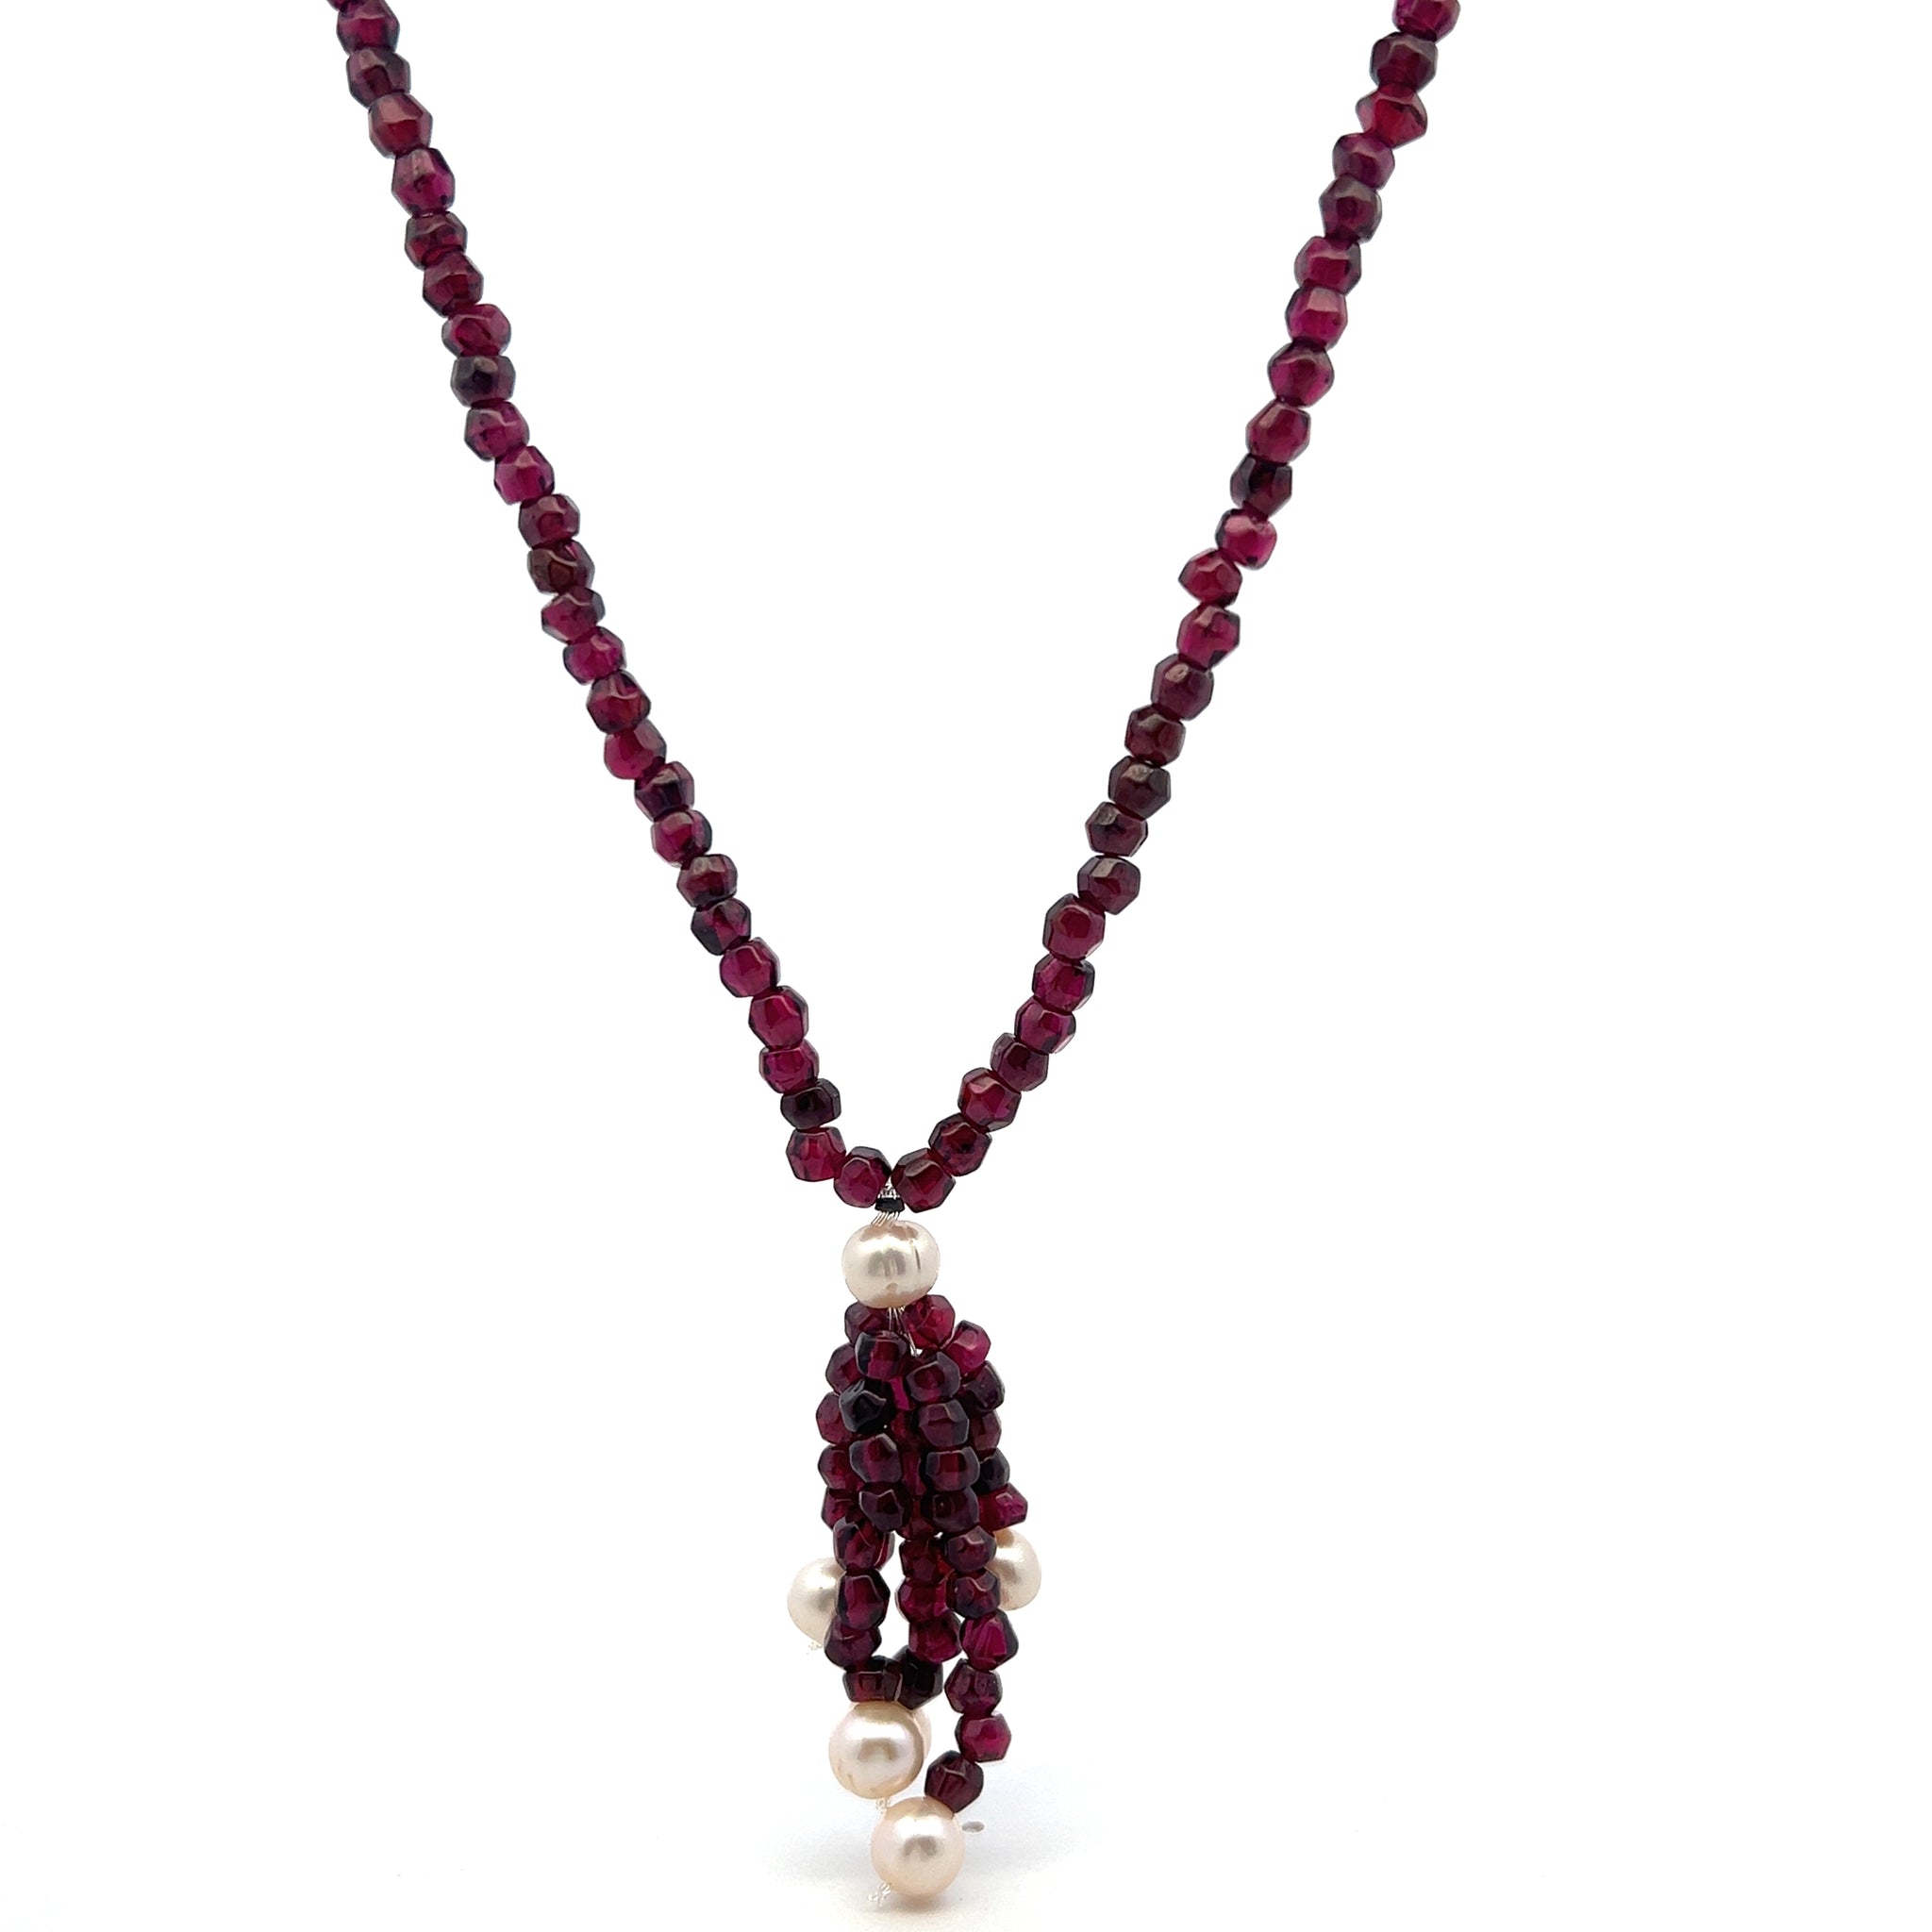 Natural Handmade Necklace 16"-18" Garnet Pearls Gemstone Beads Jewelry